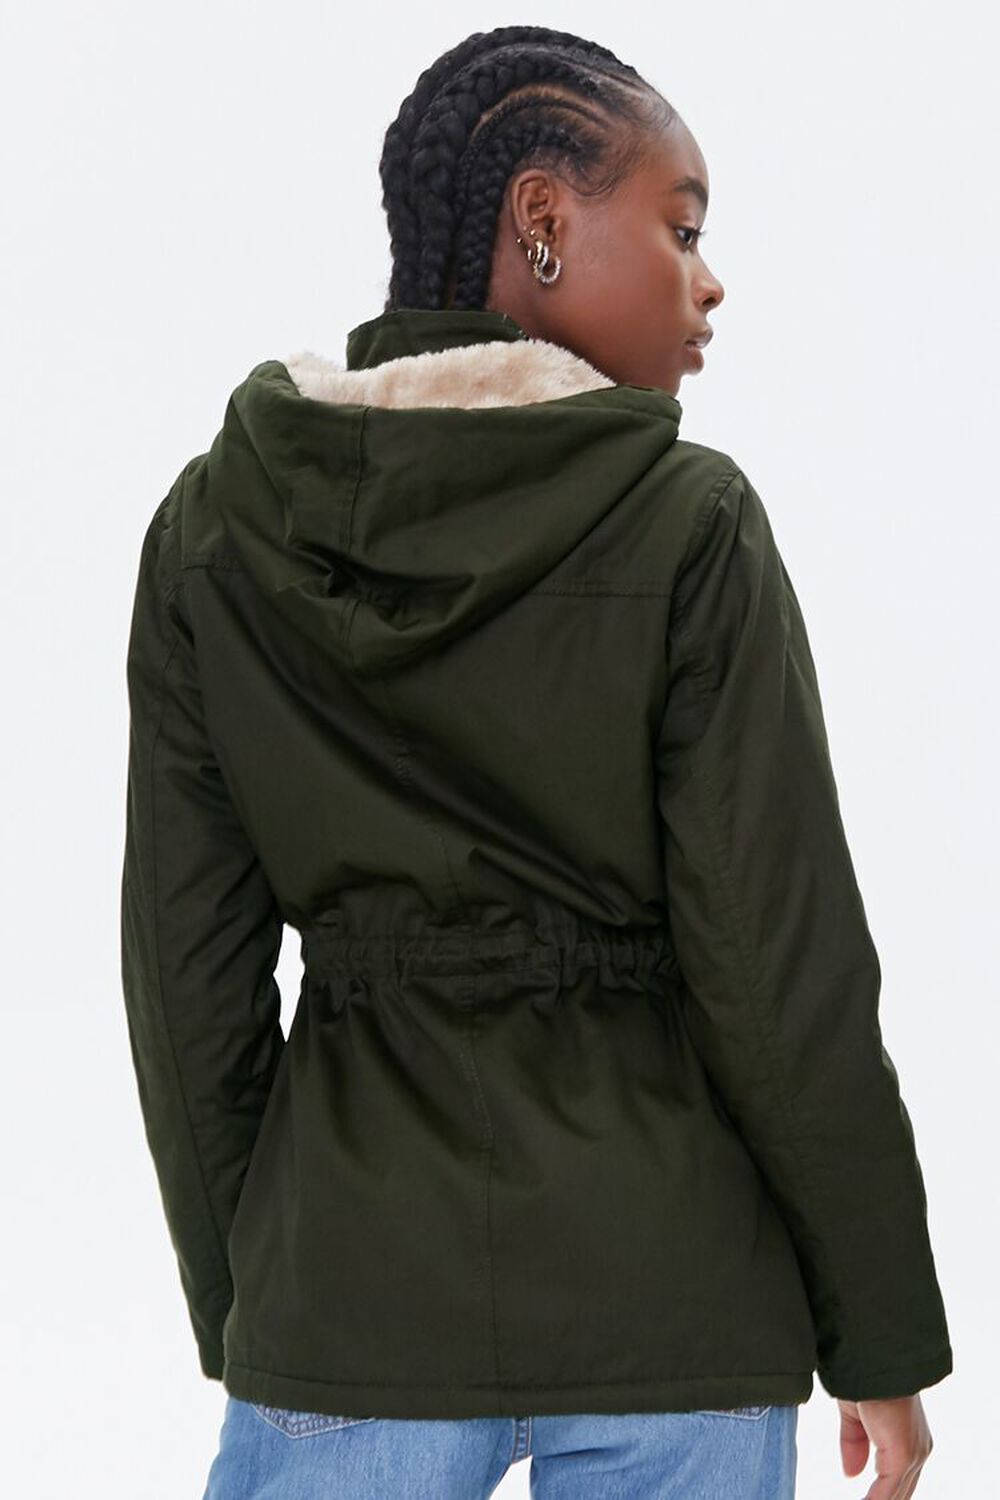 OLIVE Hooded Faux Fur-Lined Drawstring Jacket, image 3